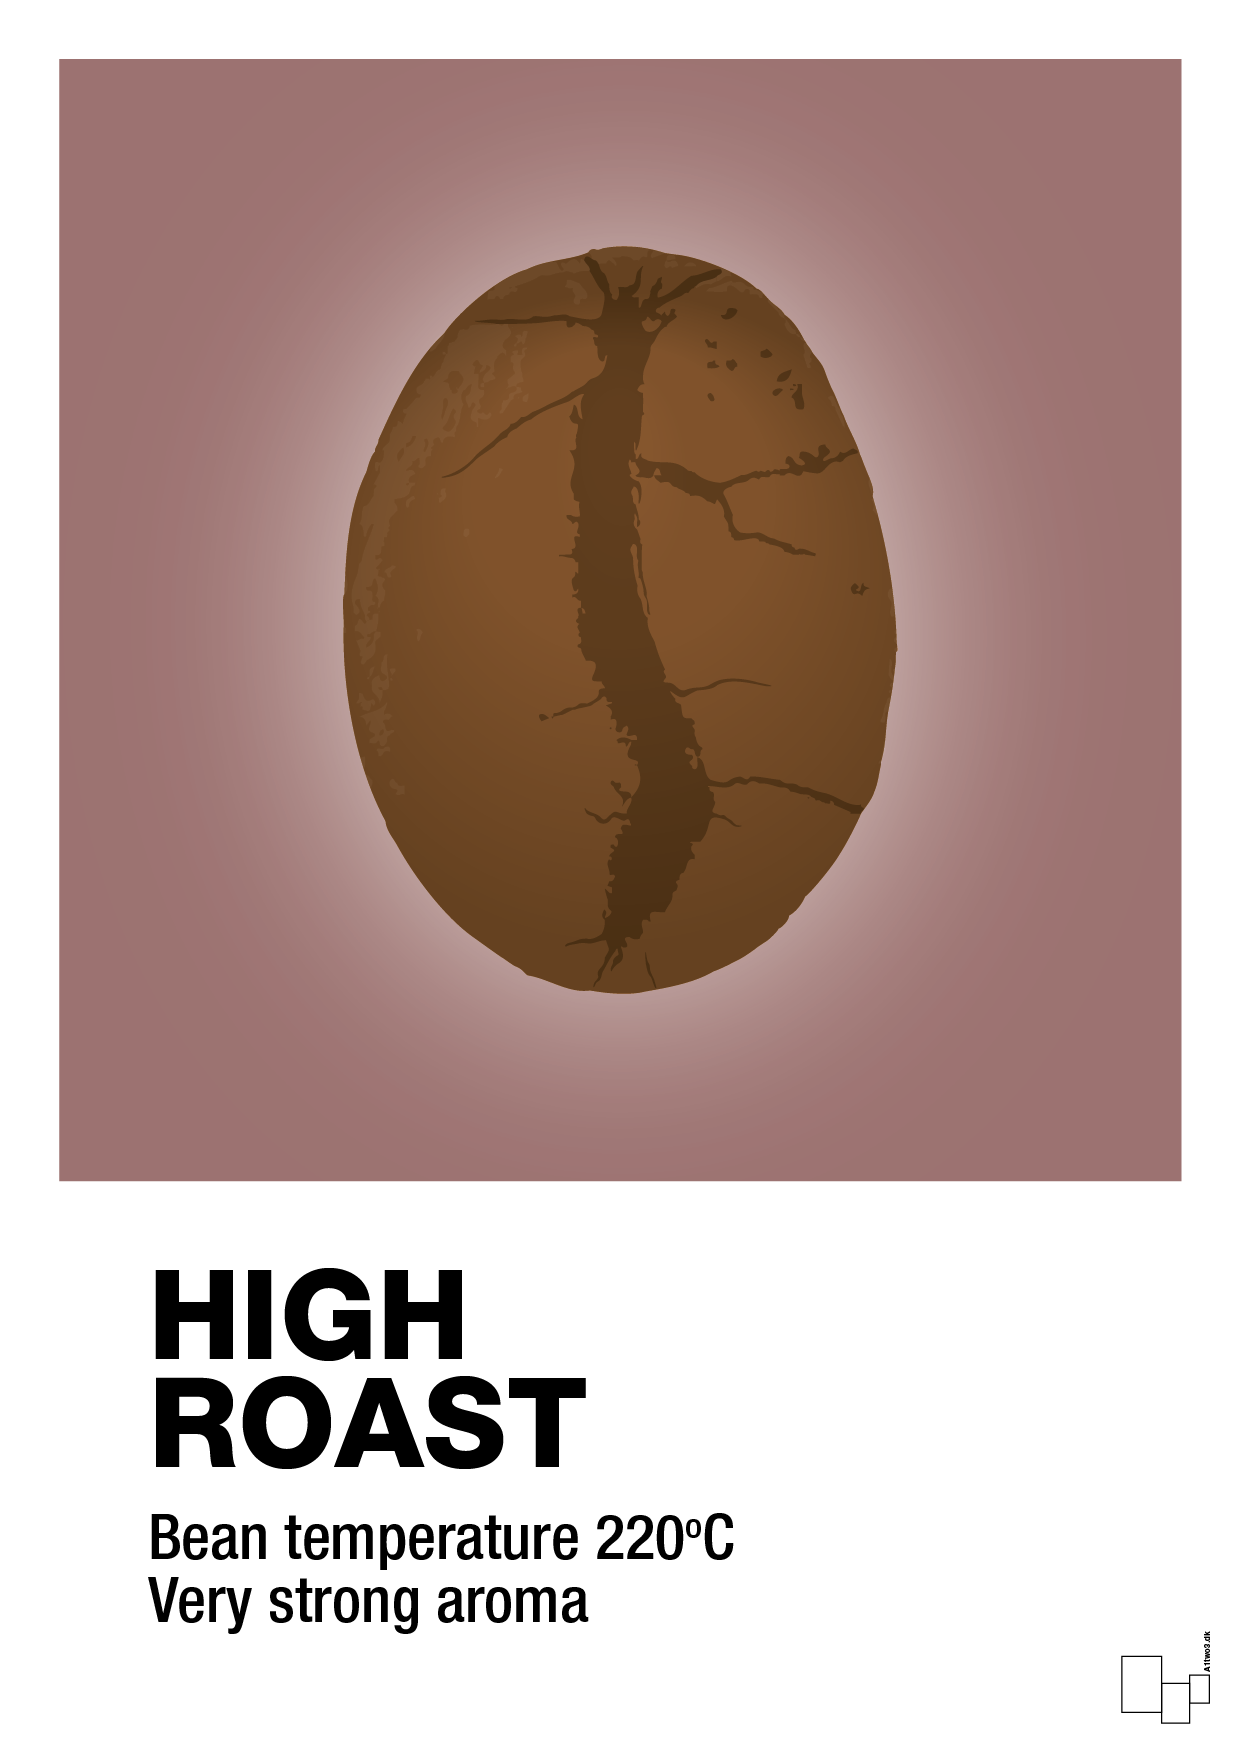 high roast - Plakat med Mad & Drikke i Plum